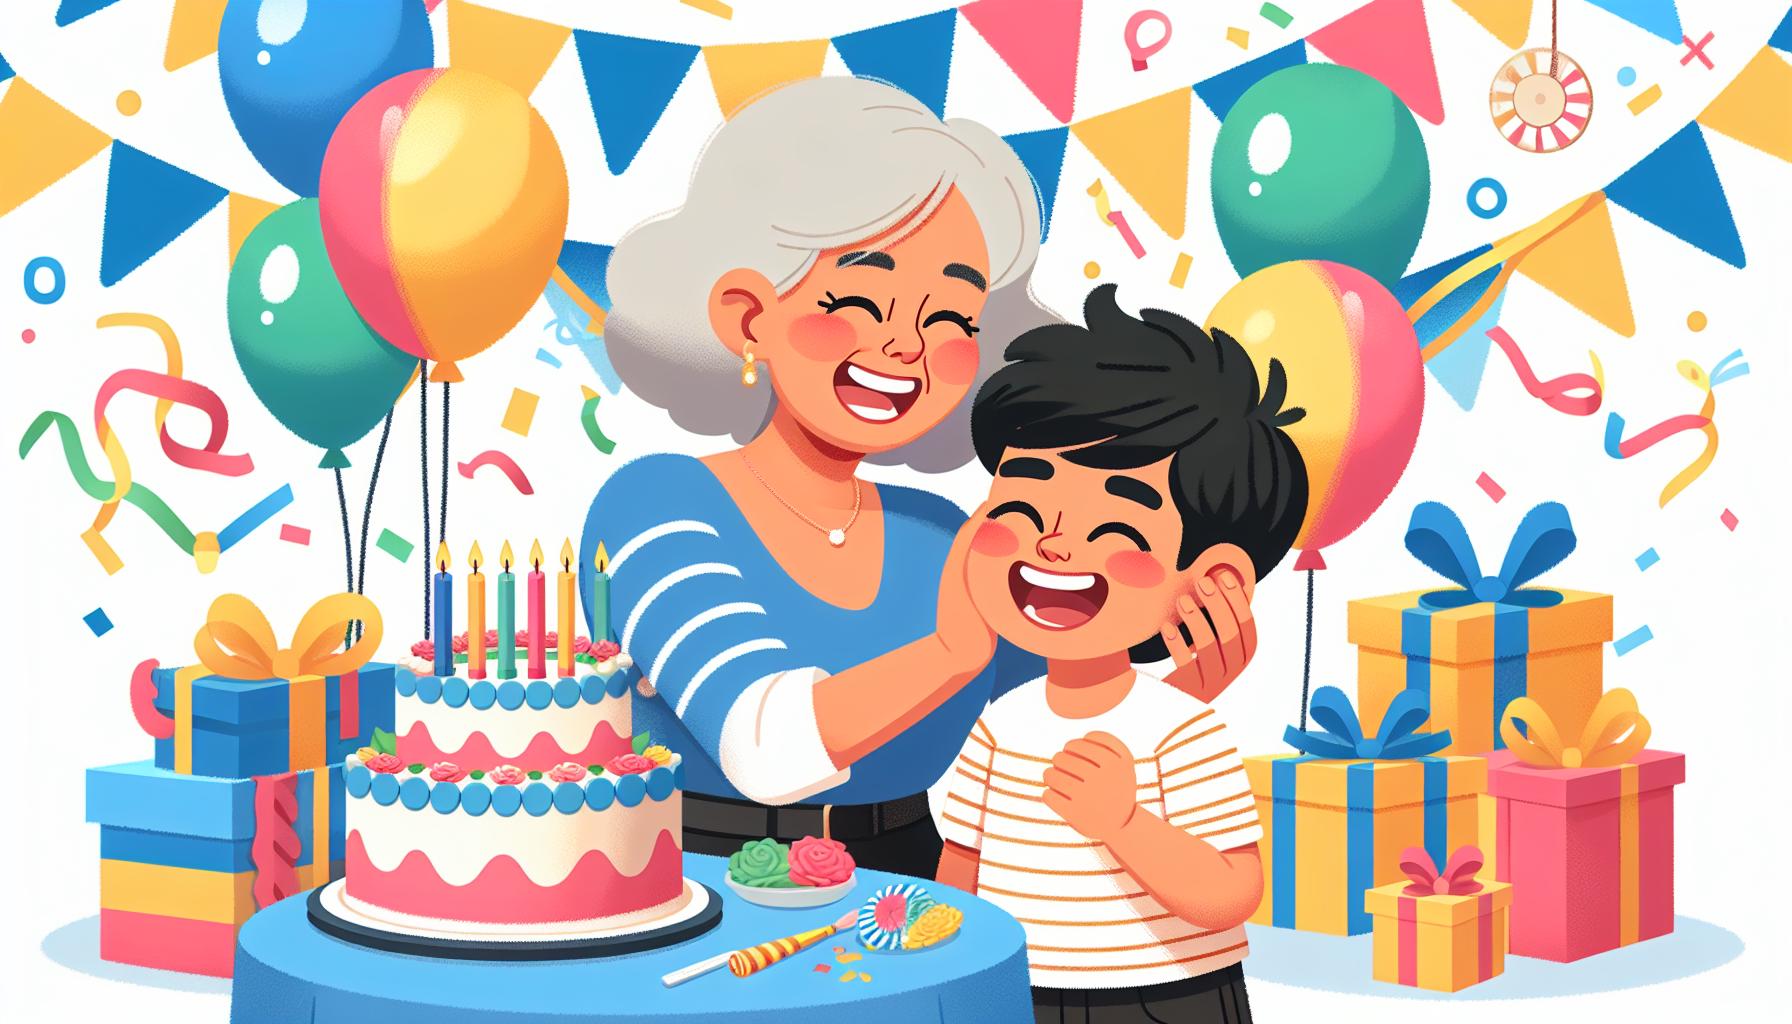 Aunt's Loving Birthday Wishes for Nephew